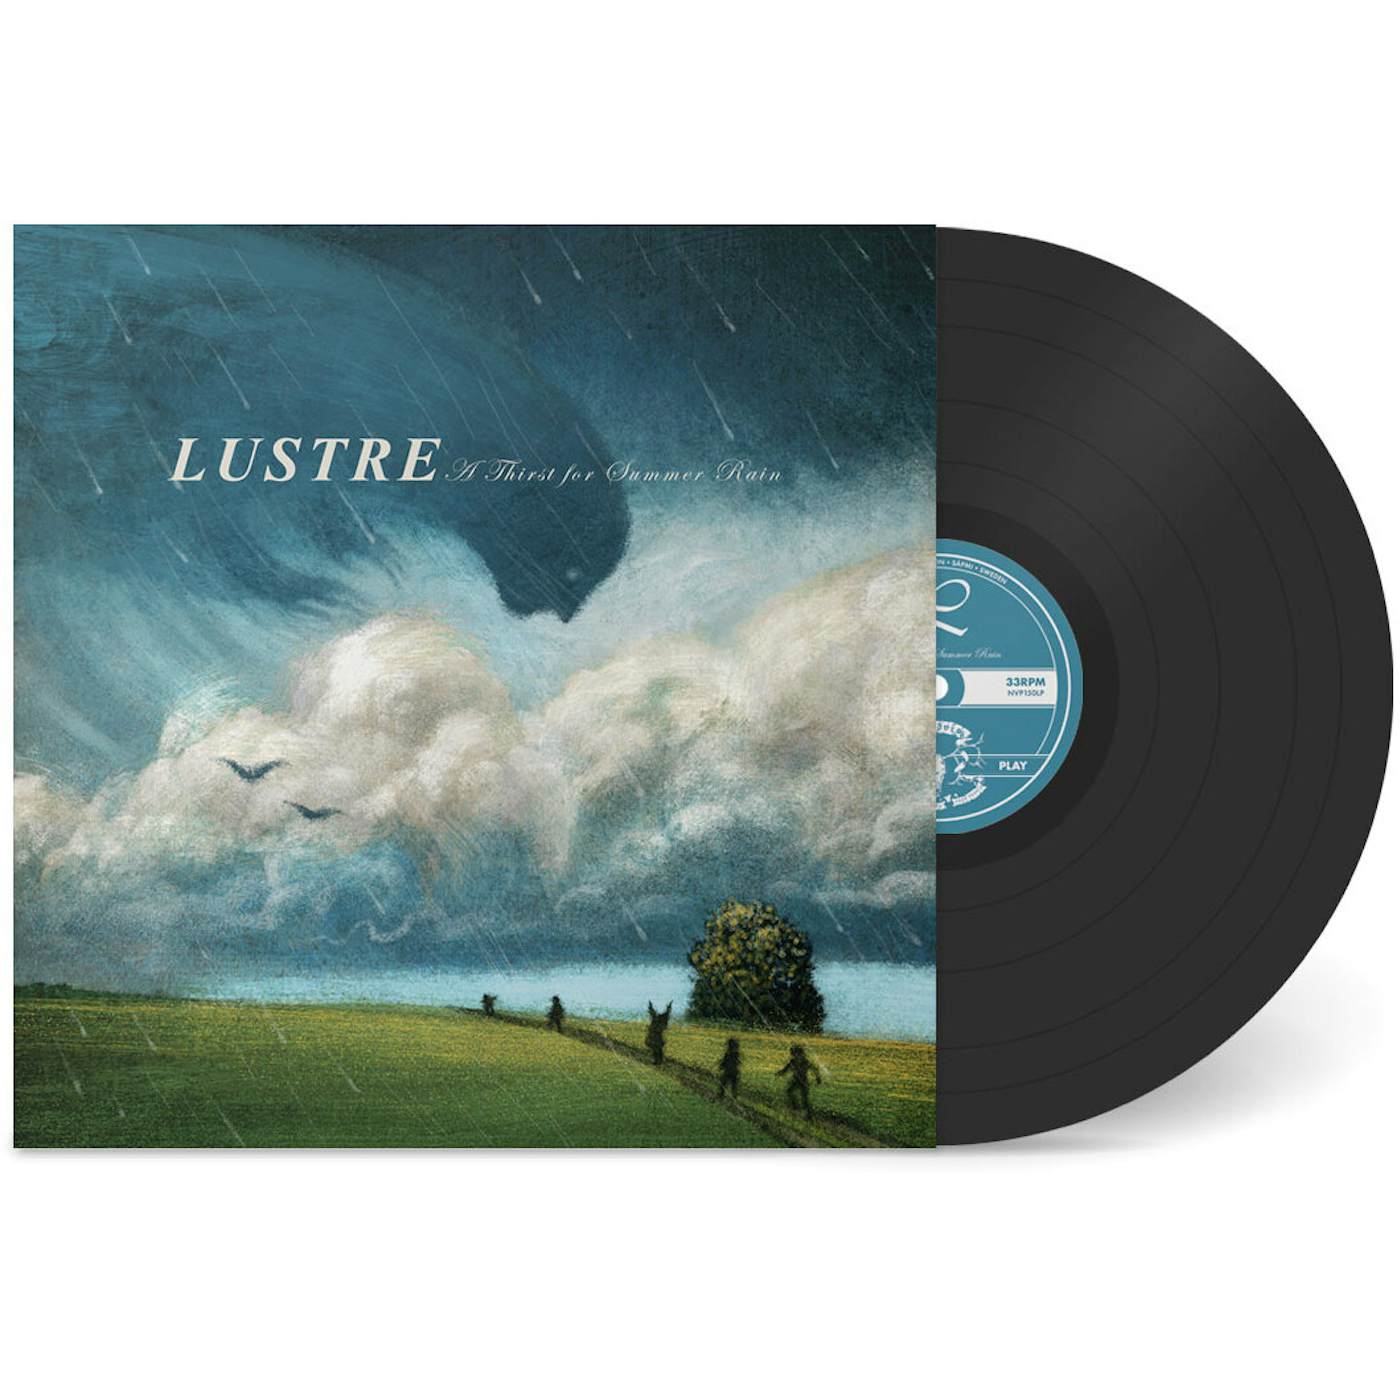 Lustre Thirst For Summer Rain Vinyl Record